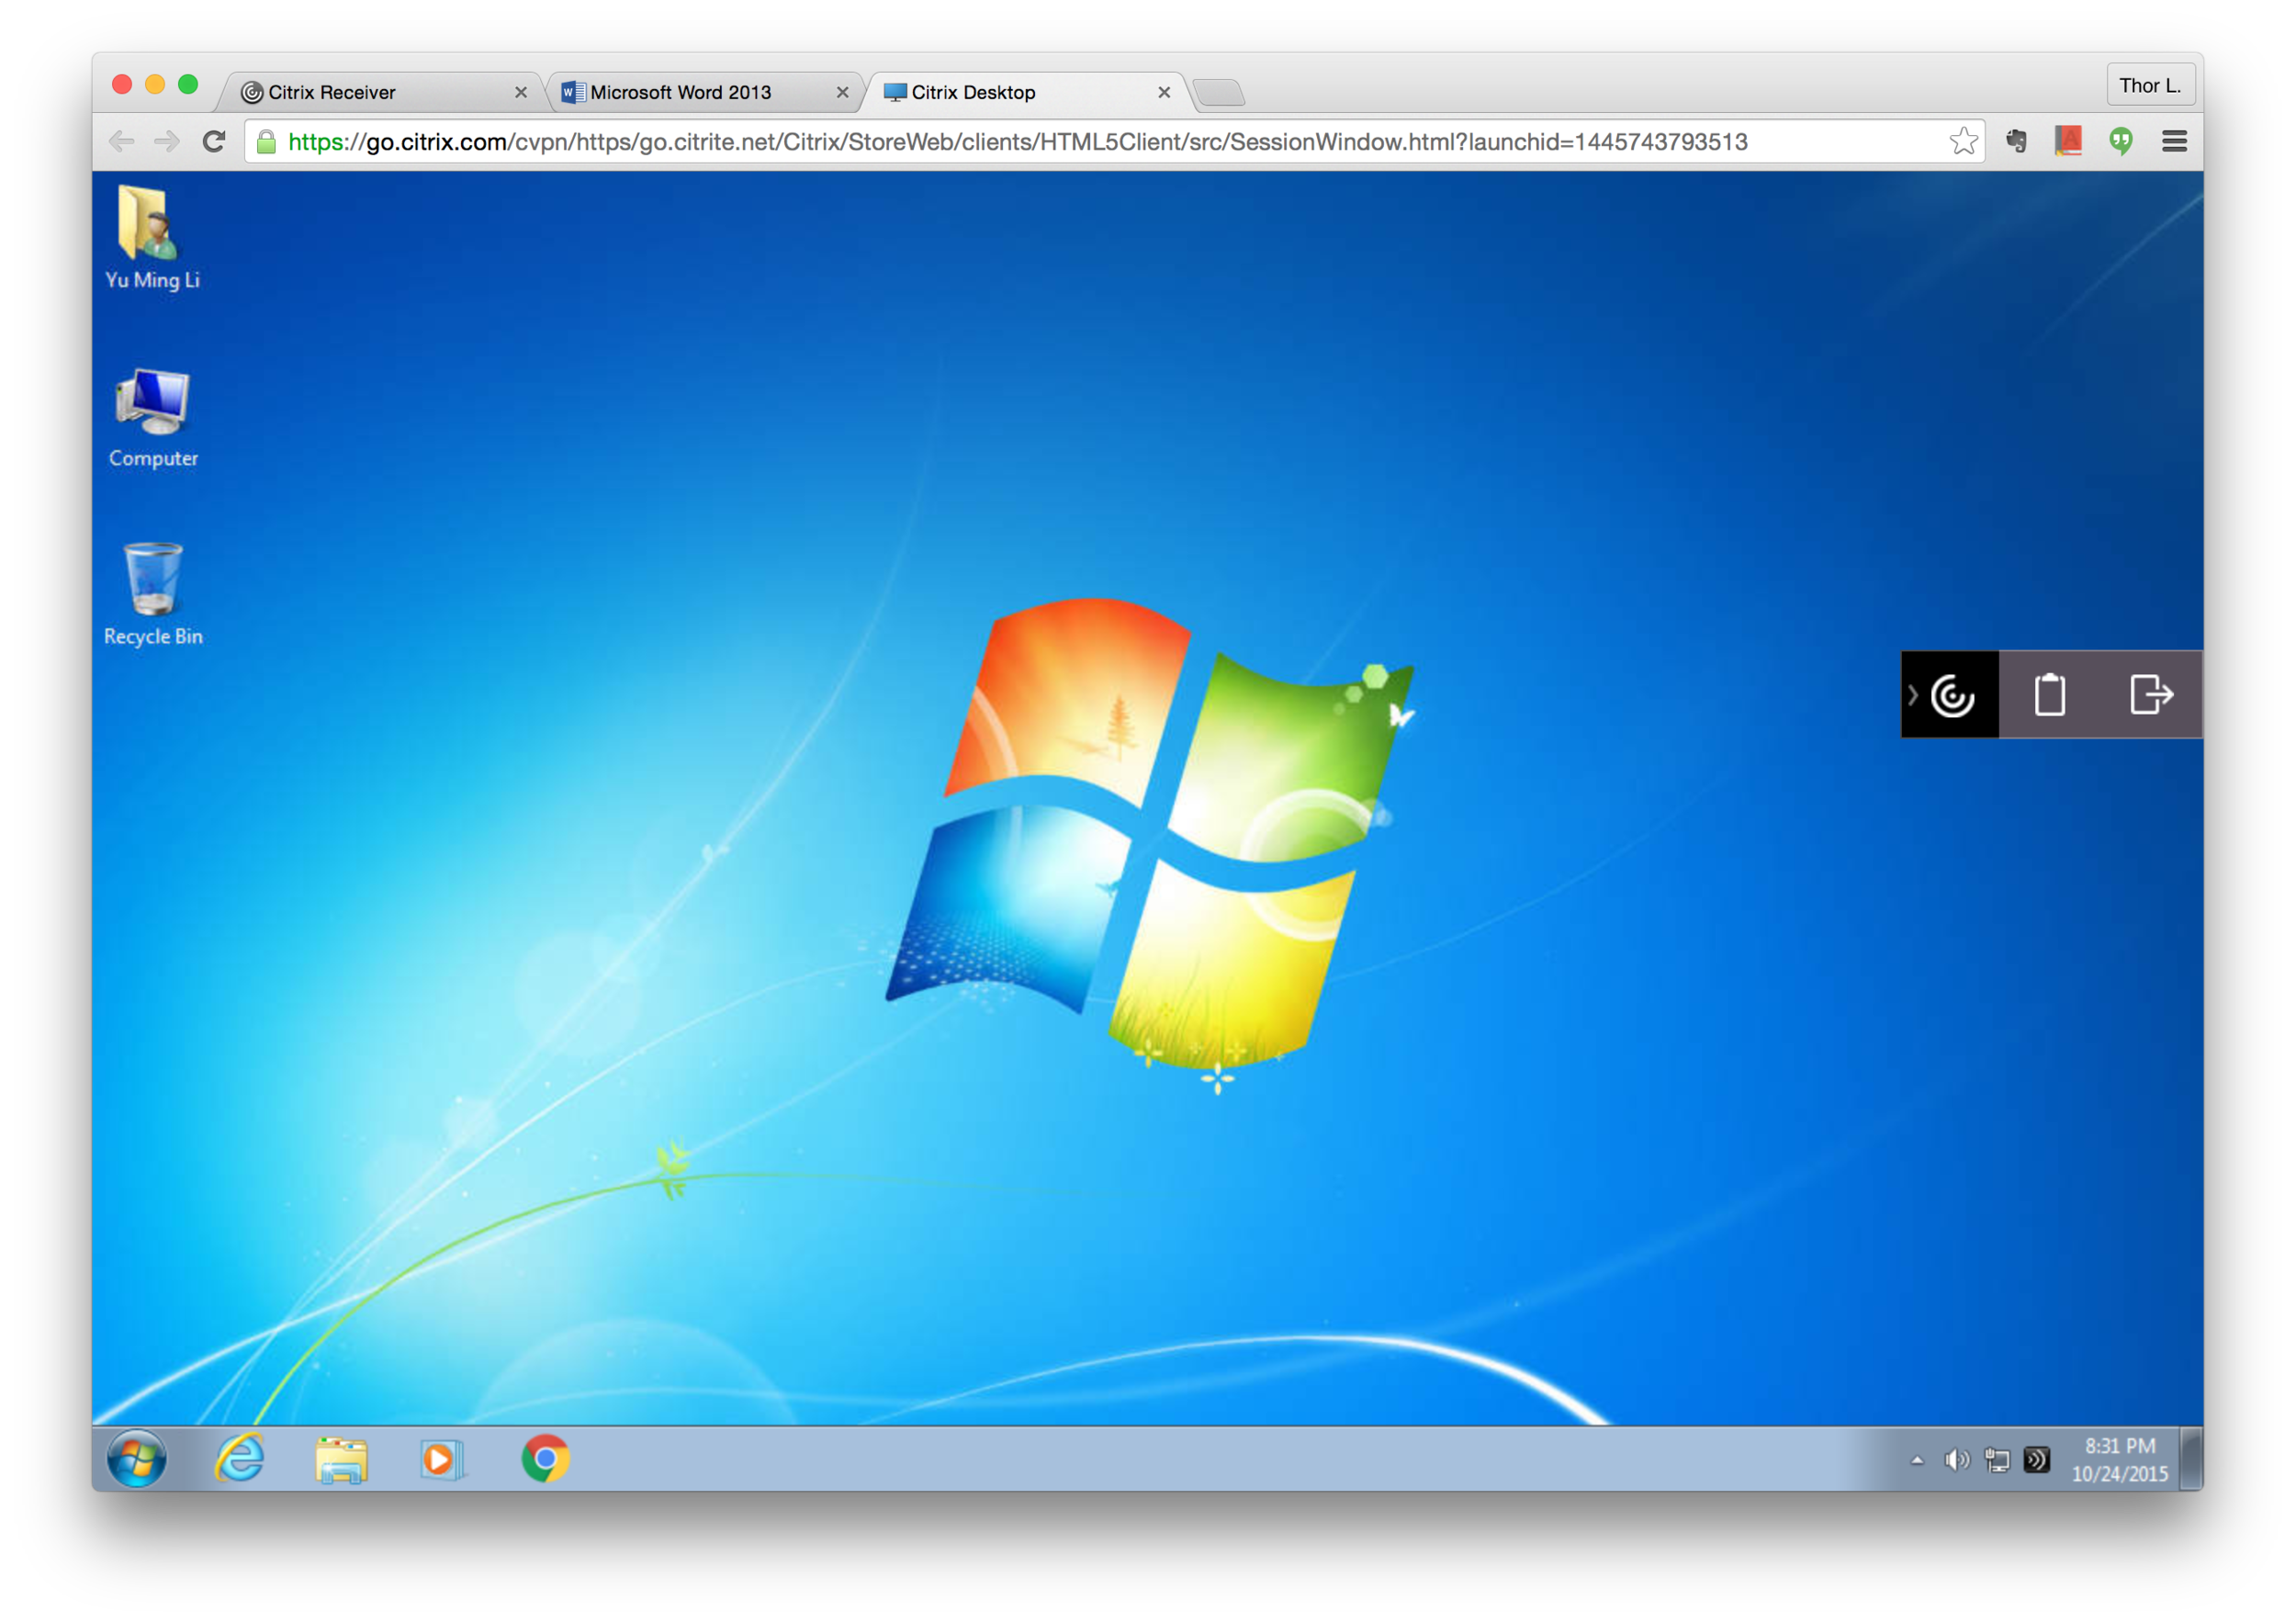  Virtual desktop (Windows 7) on Chrome browser on Mac 